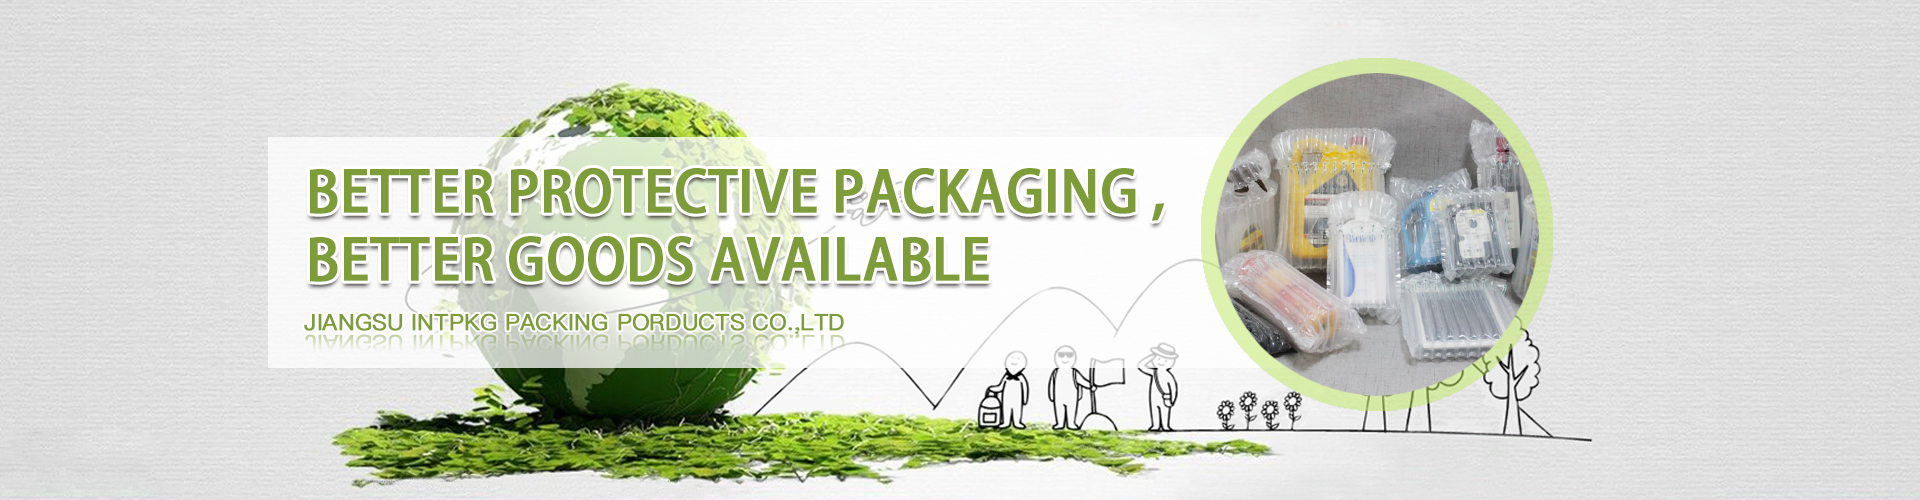 Jiangsu Intpkg Packing Products Co., Ltd.